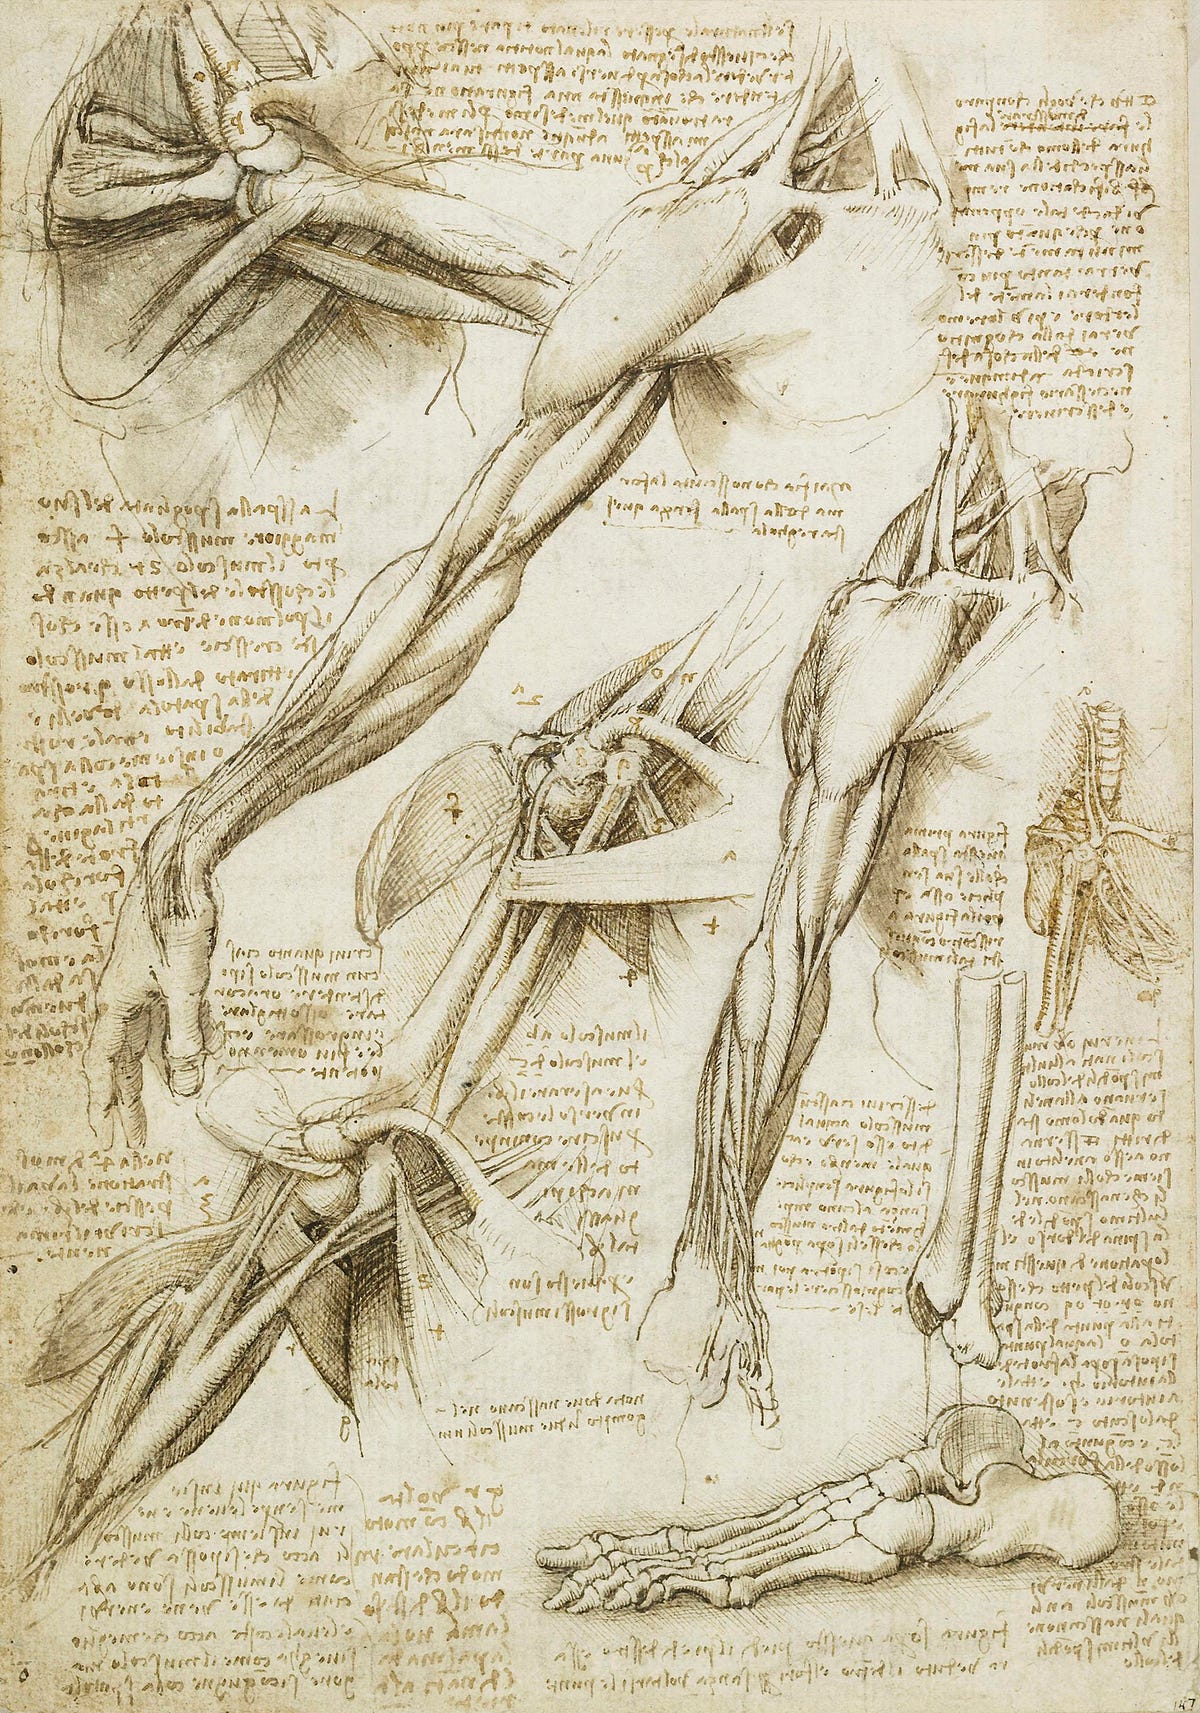 Human Body Part That Stumped Leonardo da Vinci Revealed